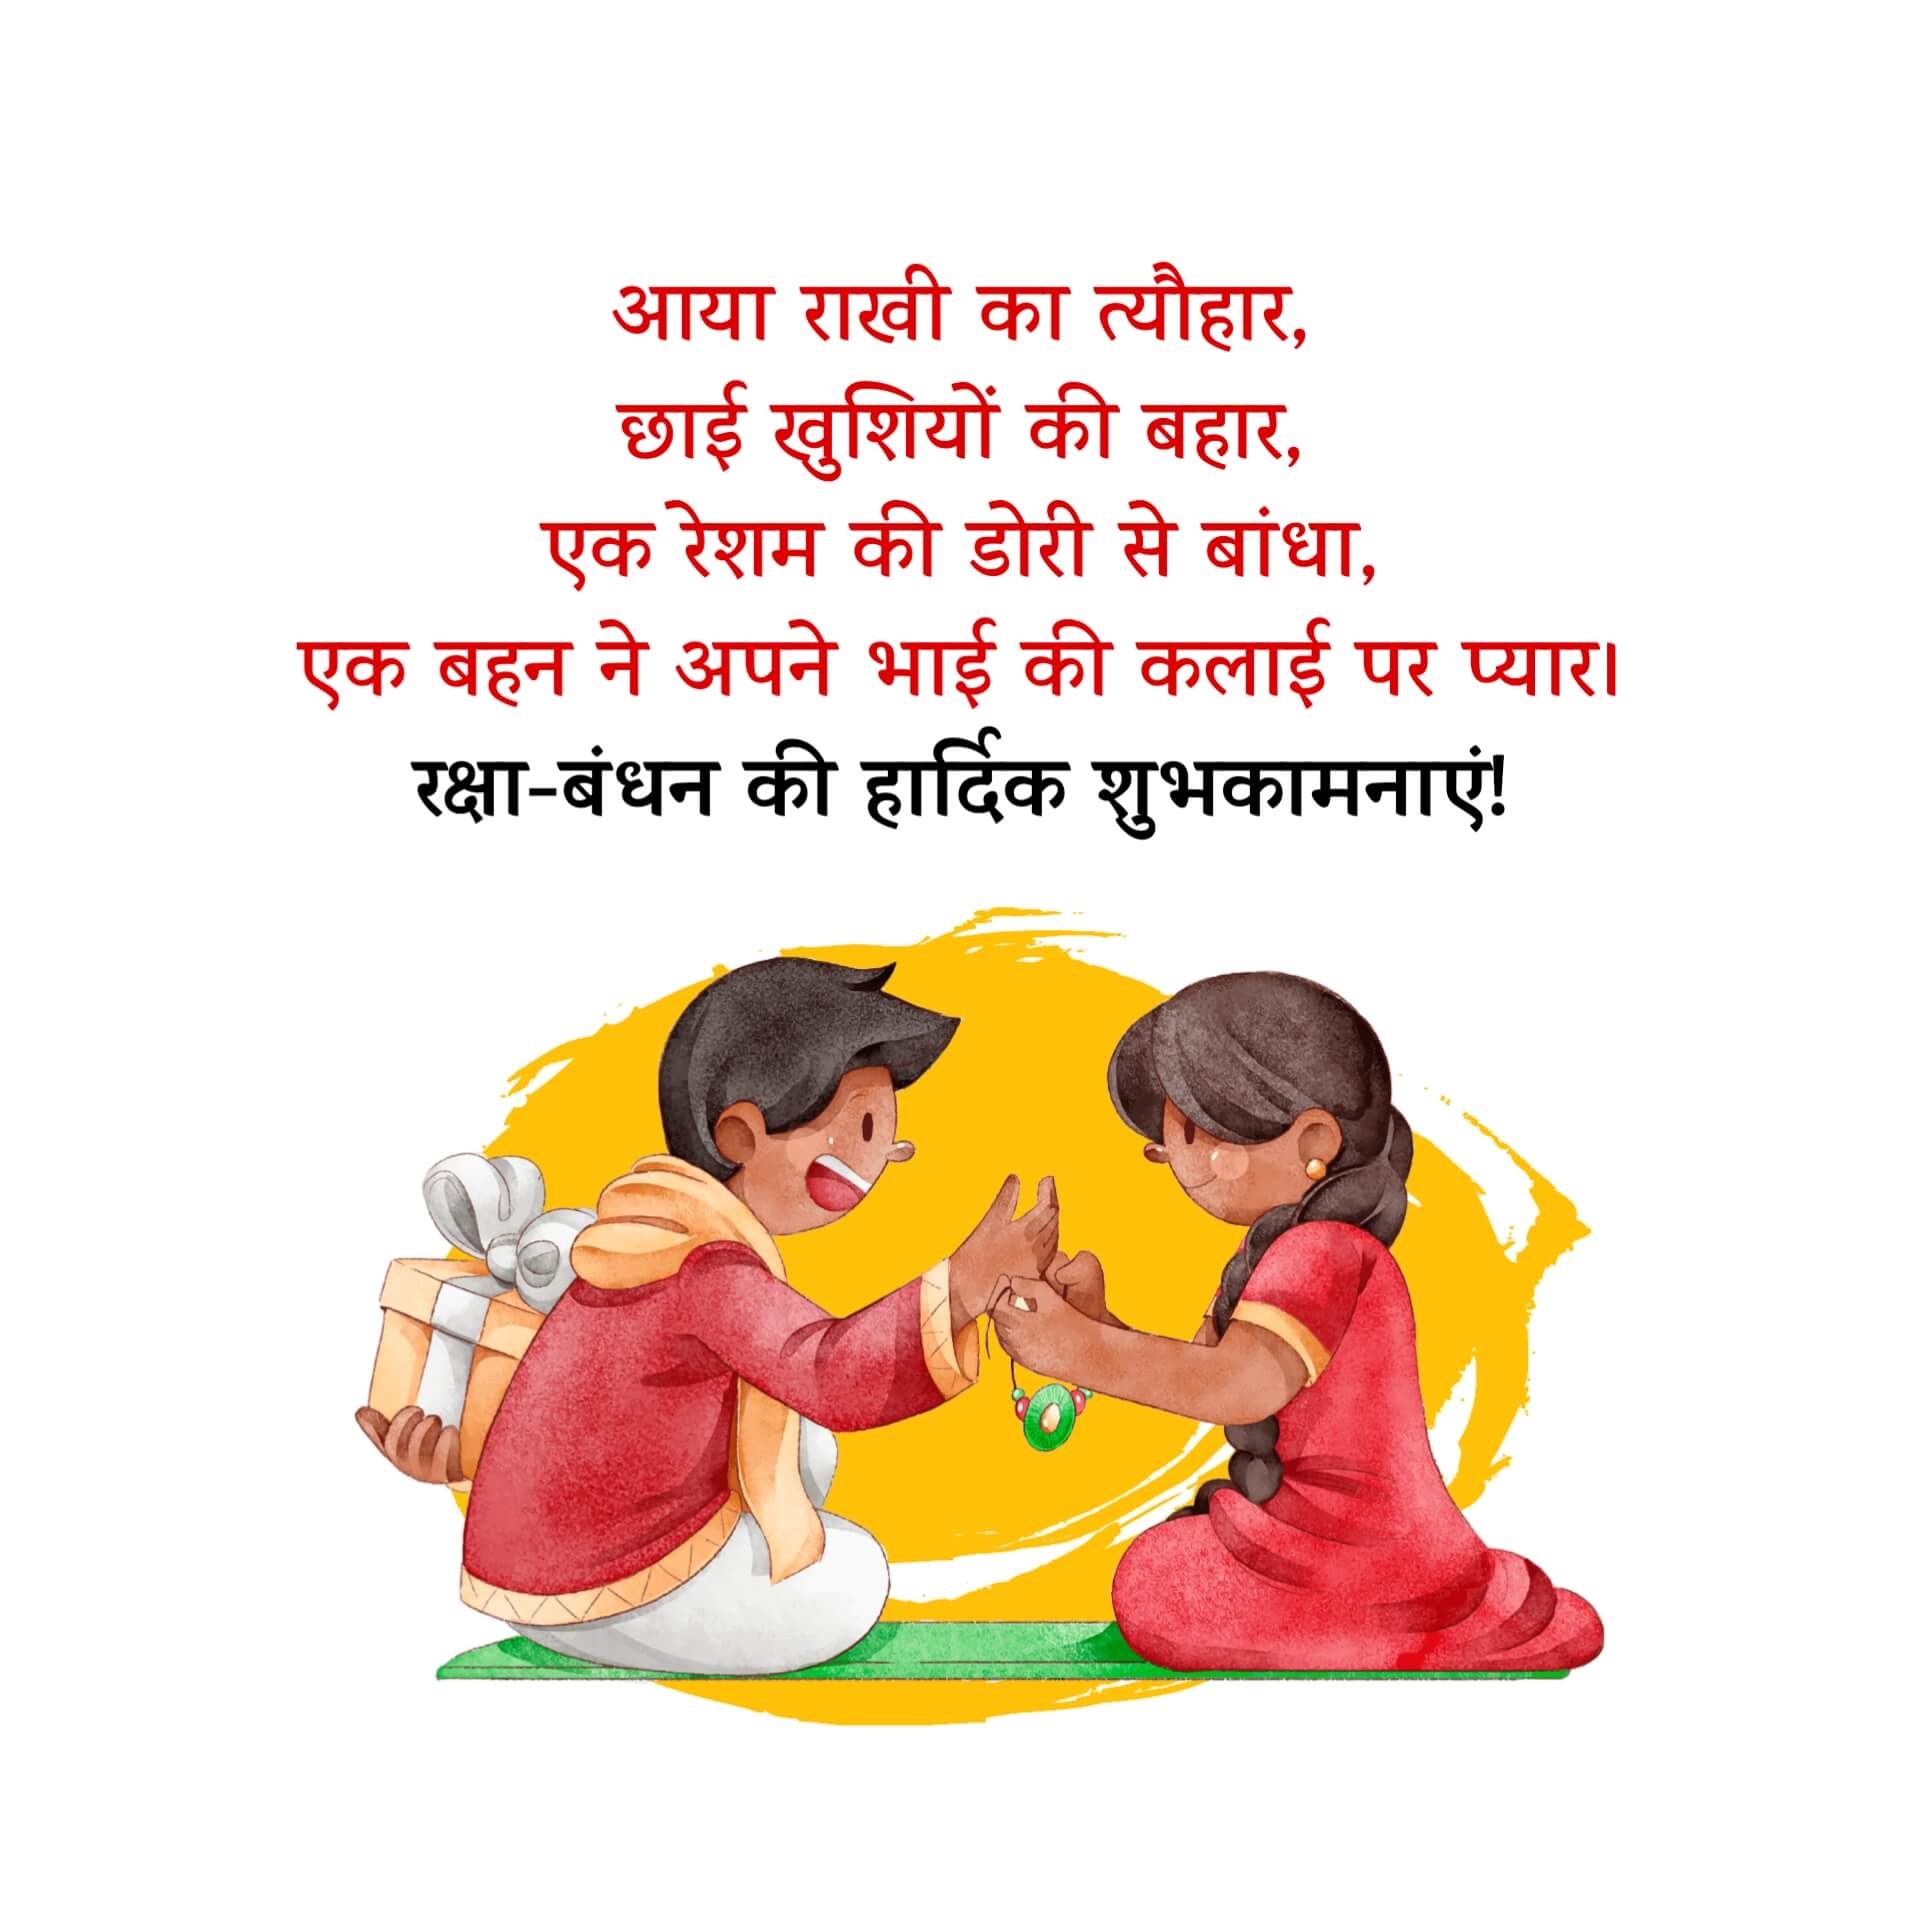 Happy Raksha Bandhan Hindi Image